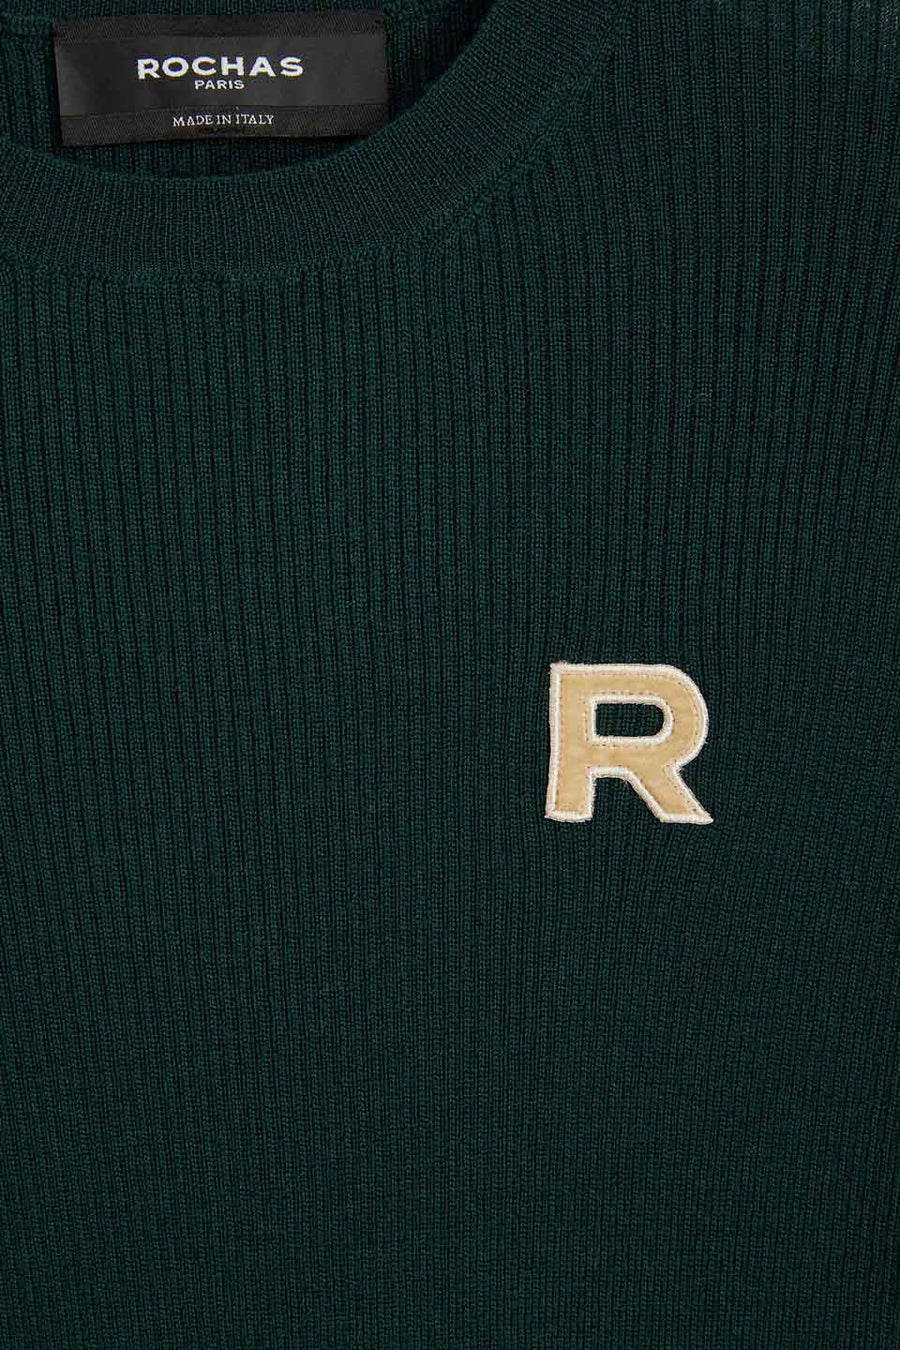 rochas long sleeve crew neck sweater green detail